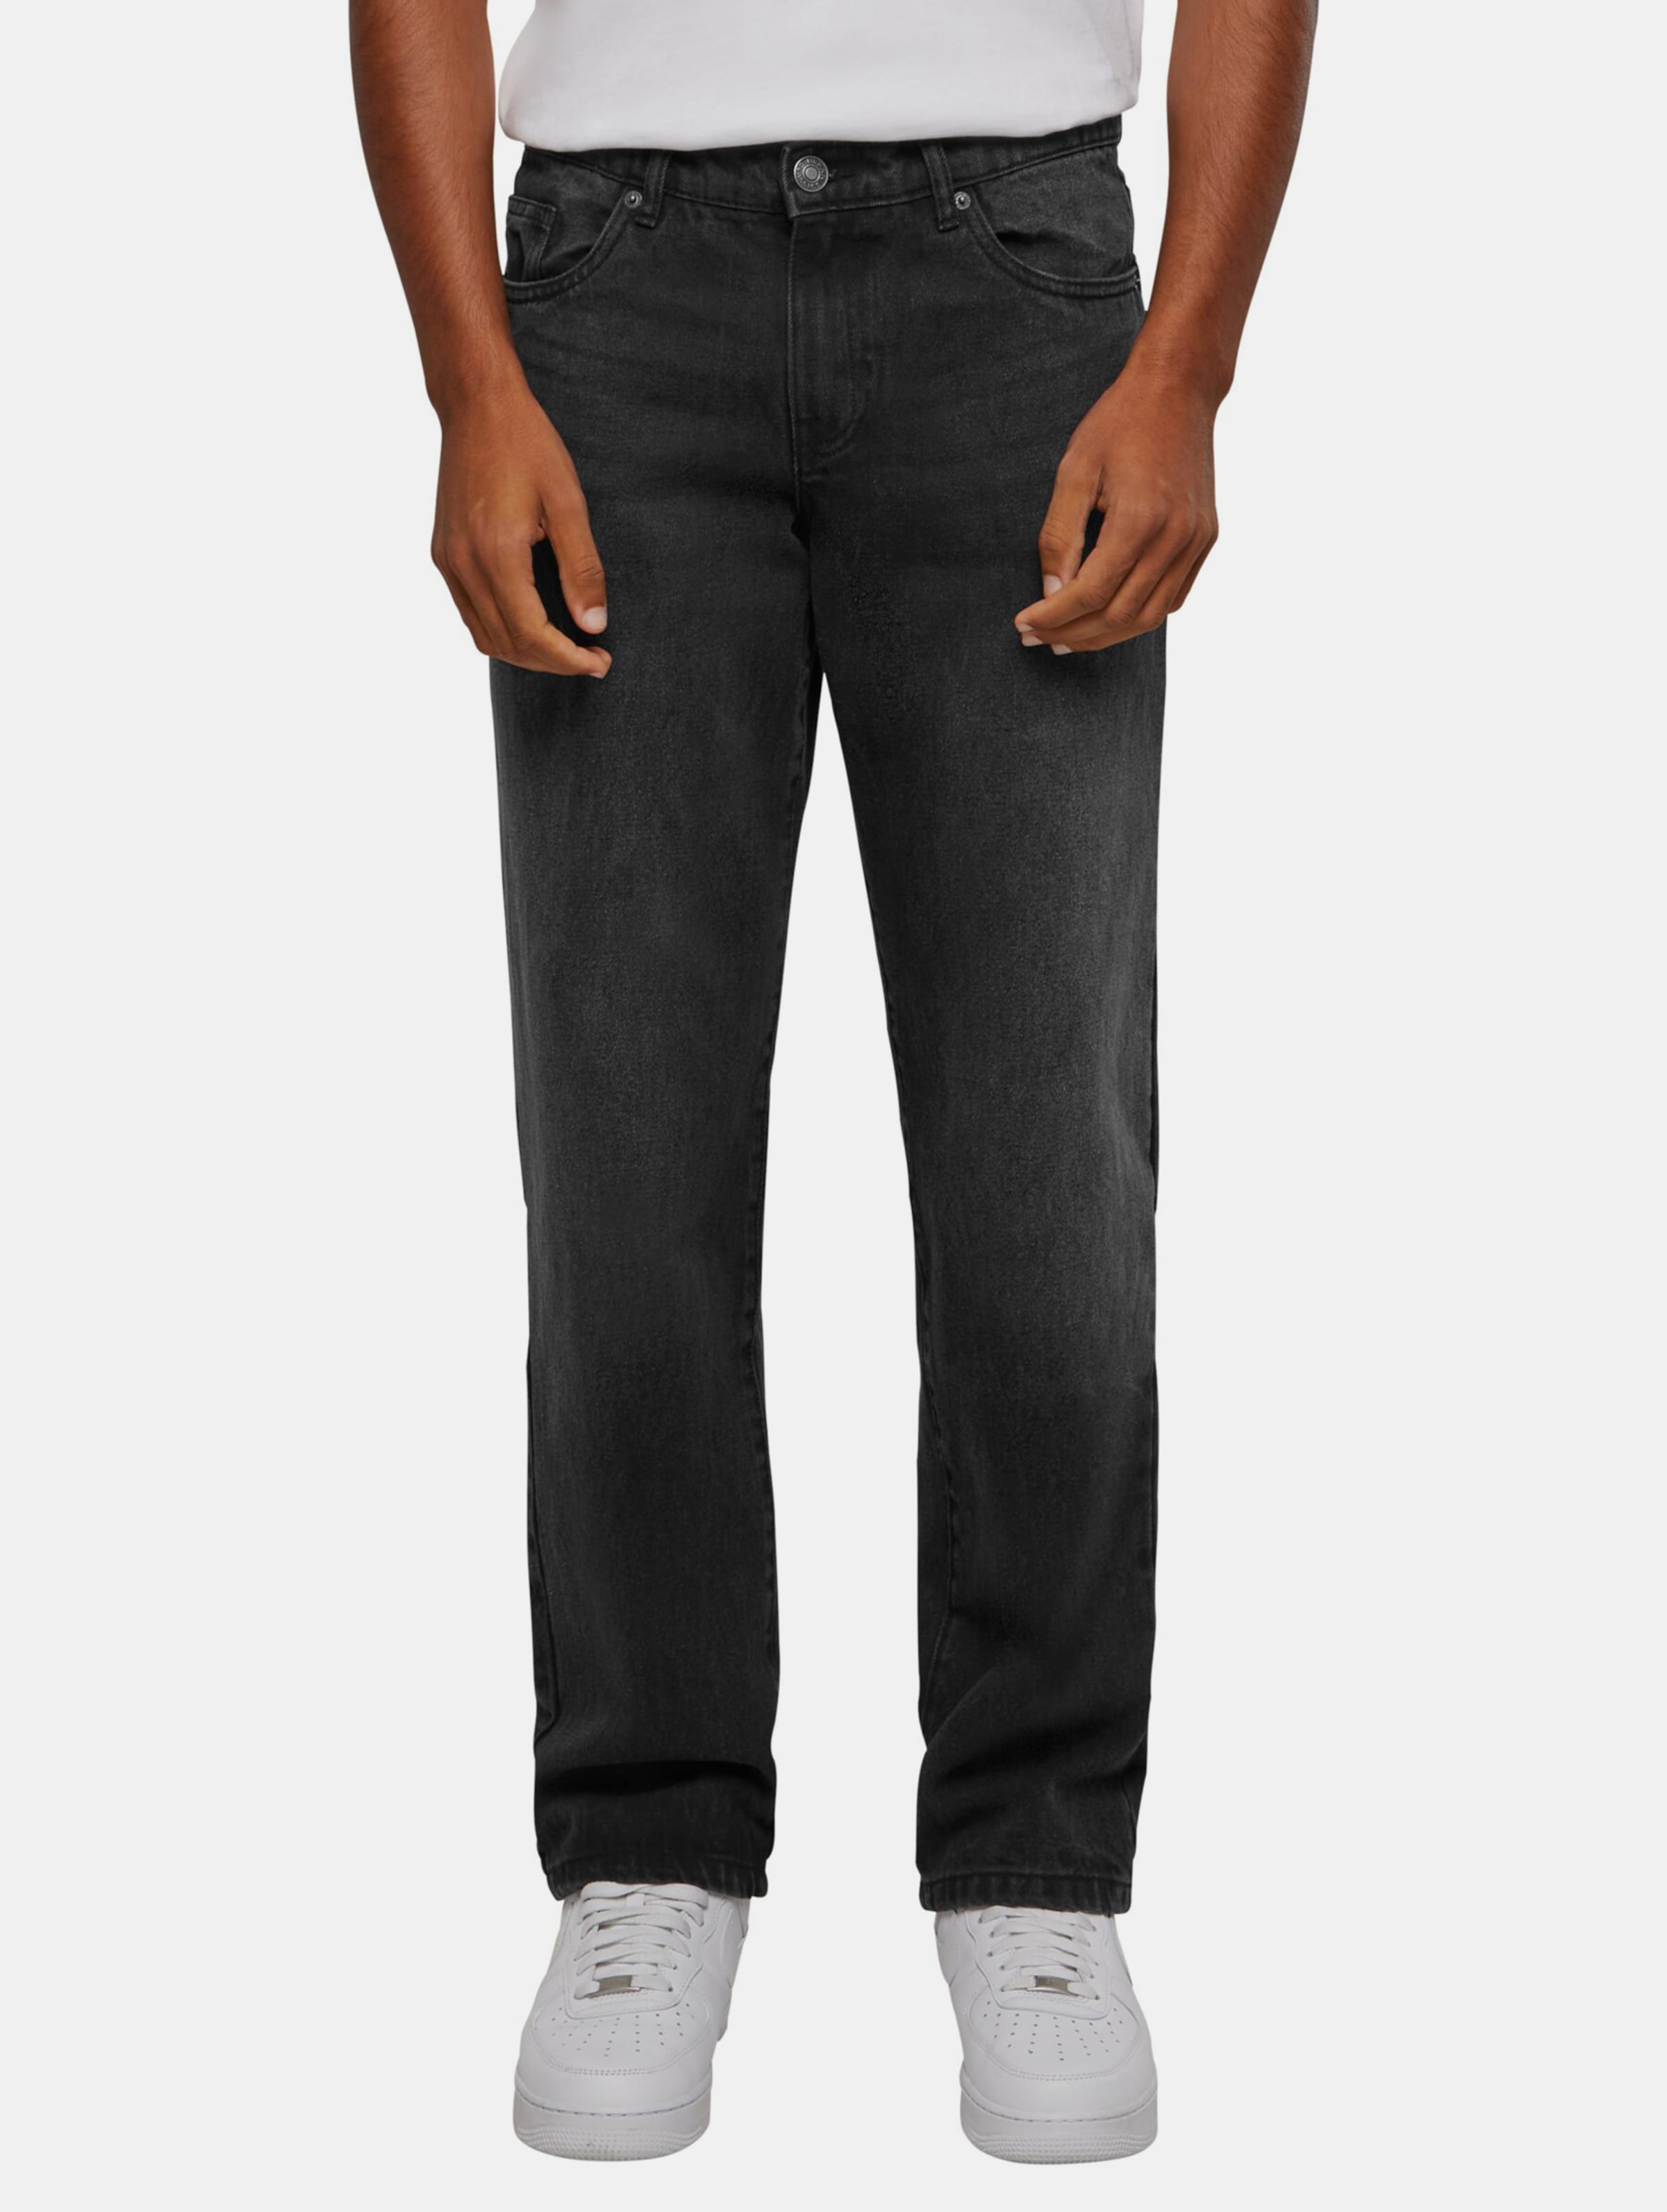 Urban Classics - Heavy Ounce Straight Fit Jeans Broek rechte pijpen - Taille, 31 inch - Zwart